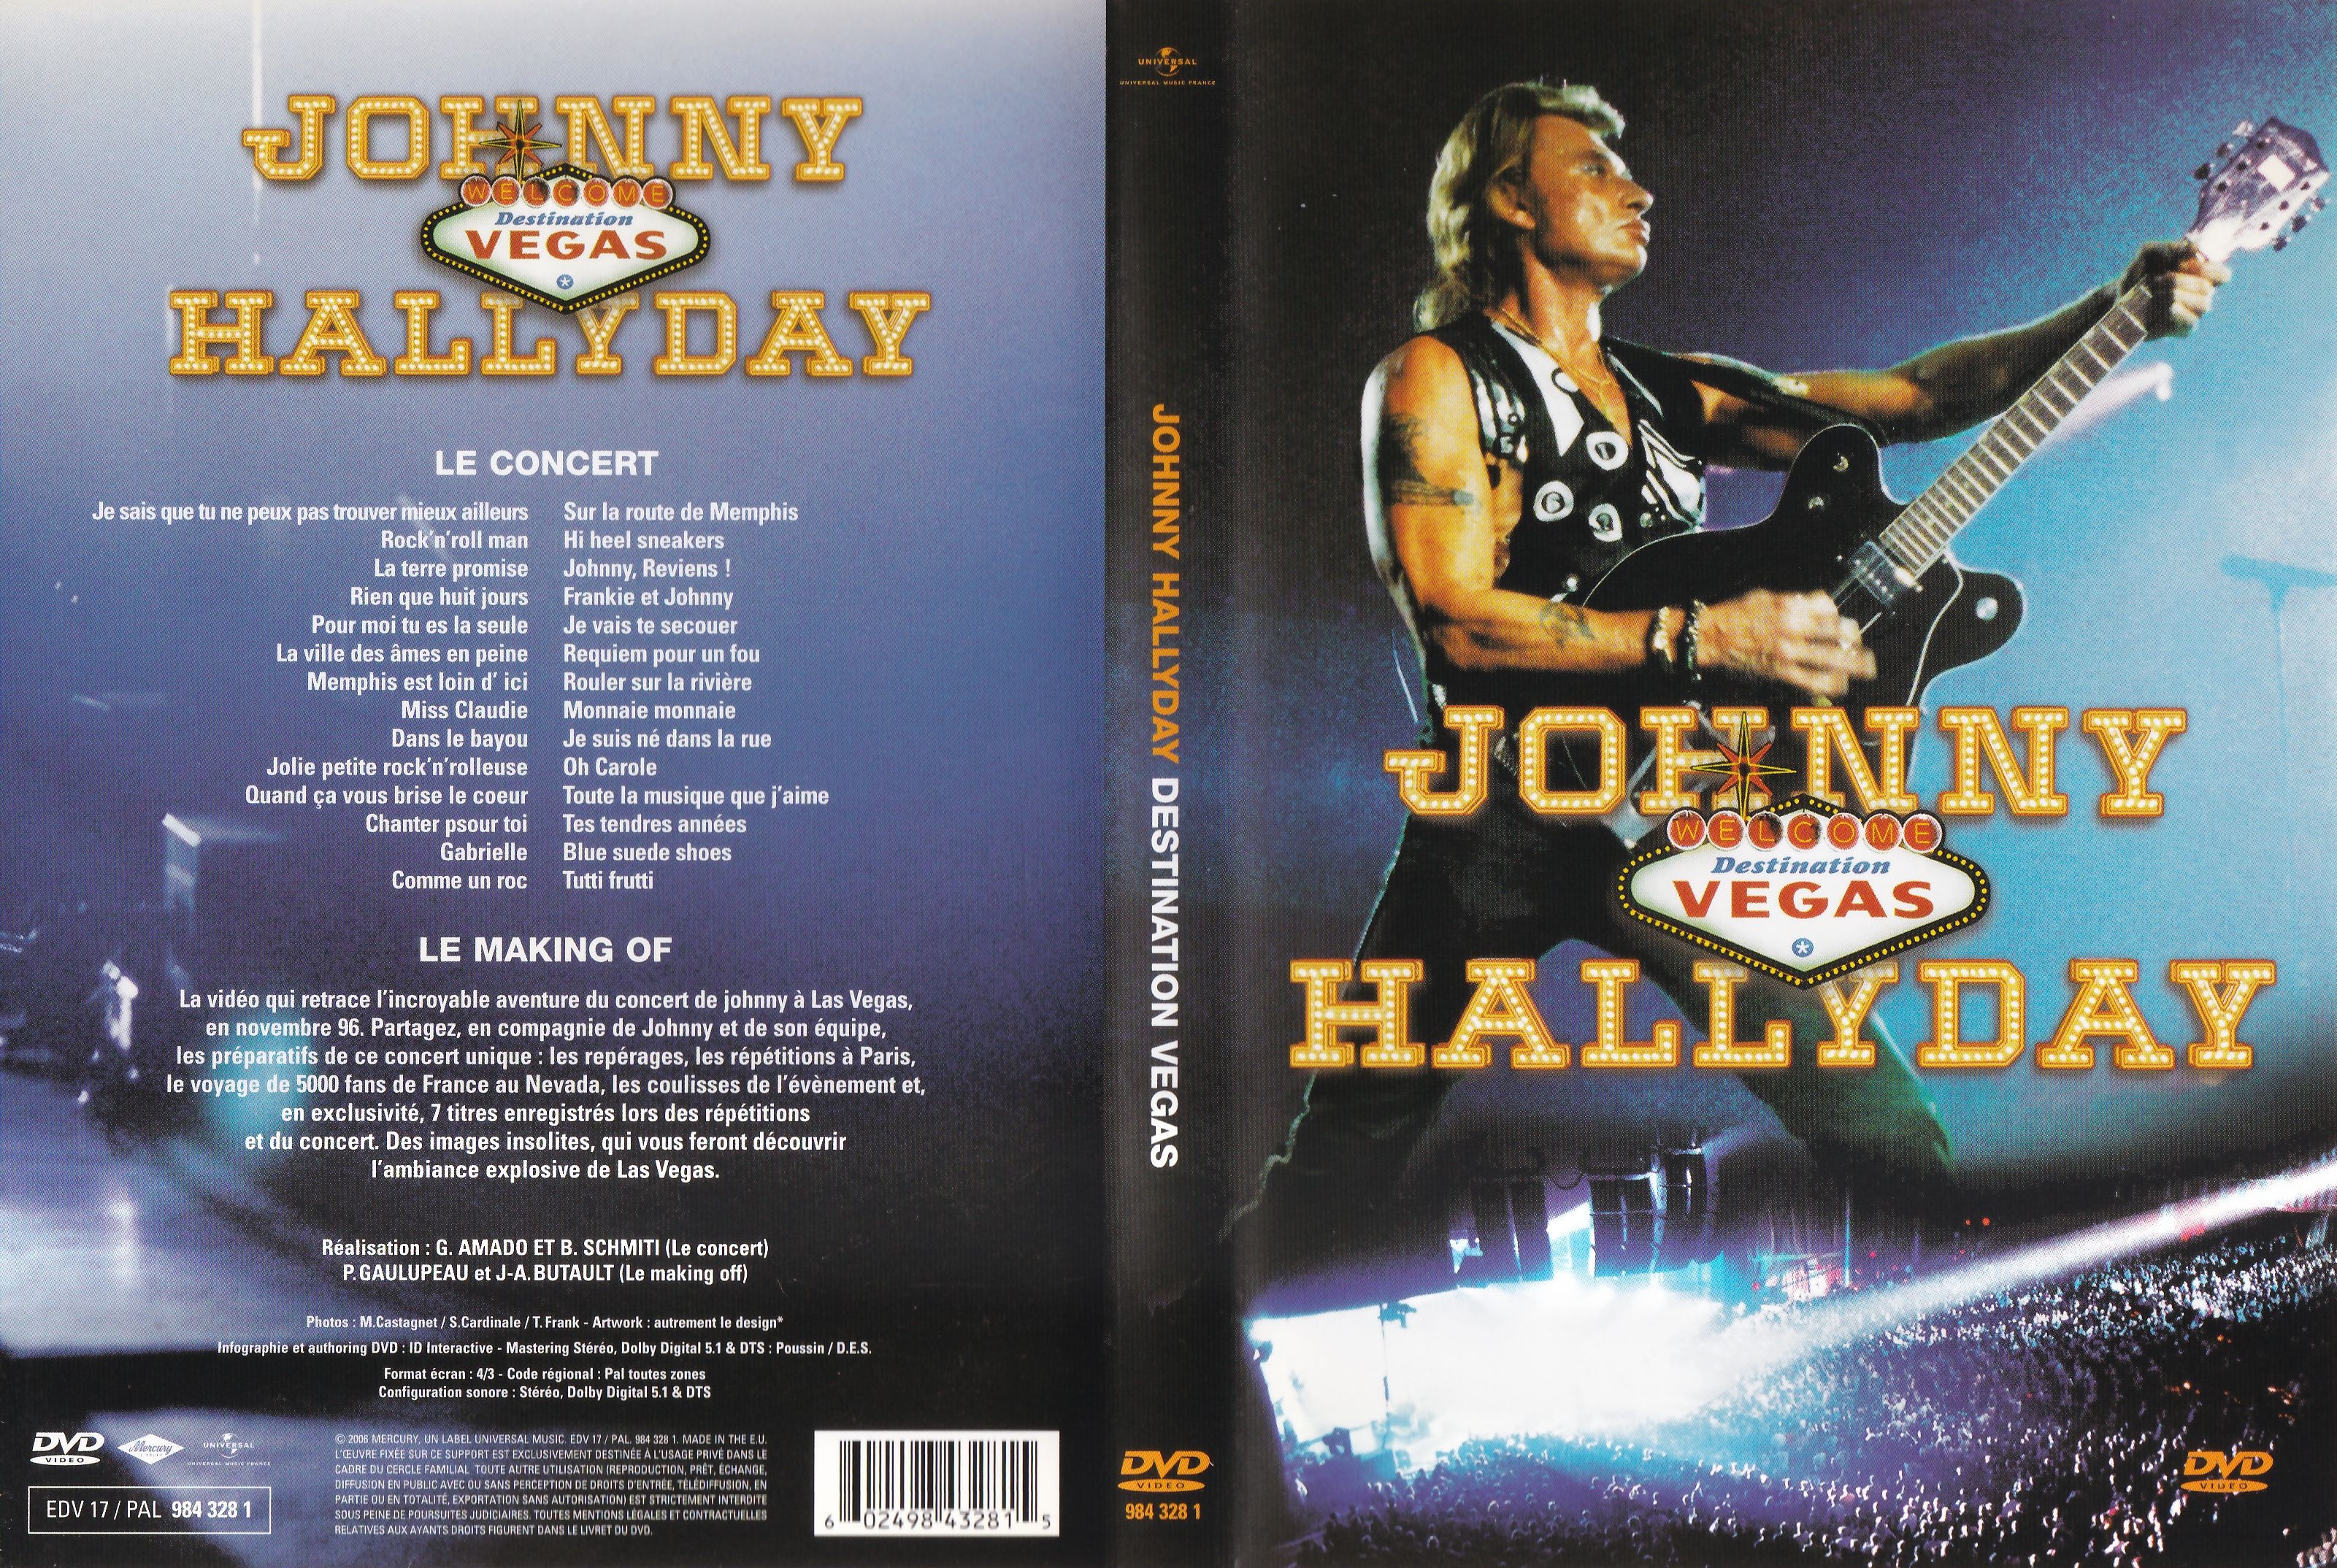 Jaquette DVD Johnny Hallyday Destination Vegas